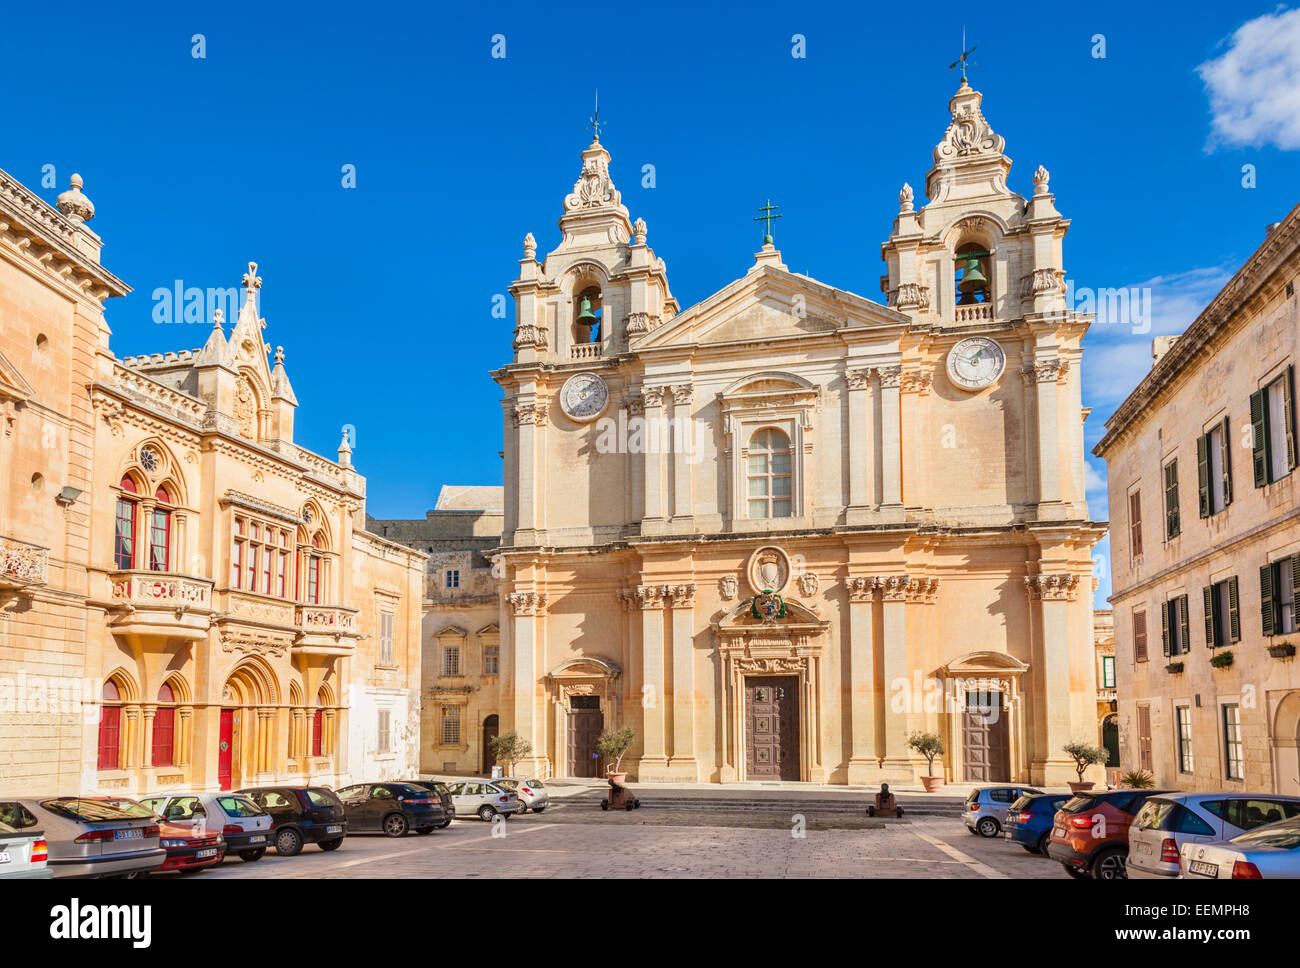 St Pauls Cathedral und St. Pauls Square Mdina Malta EU Europa Stockfoto